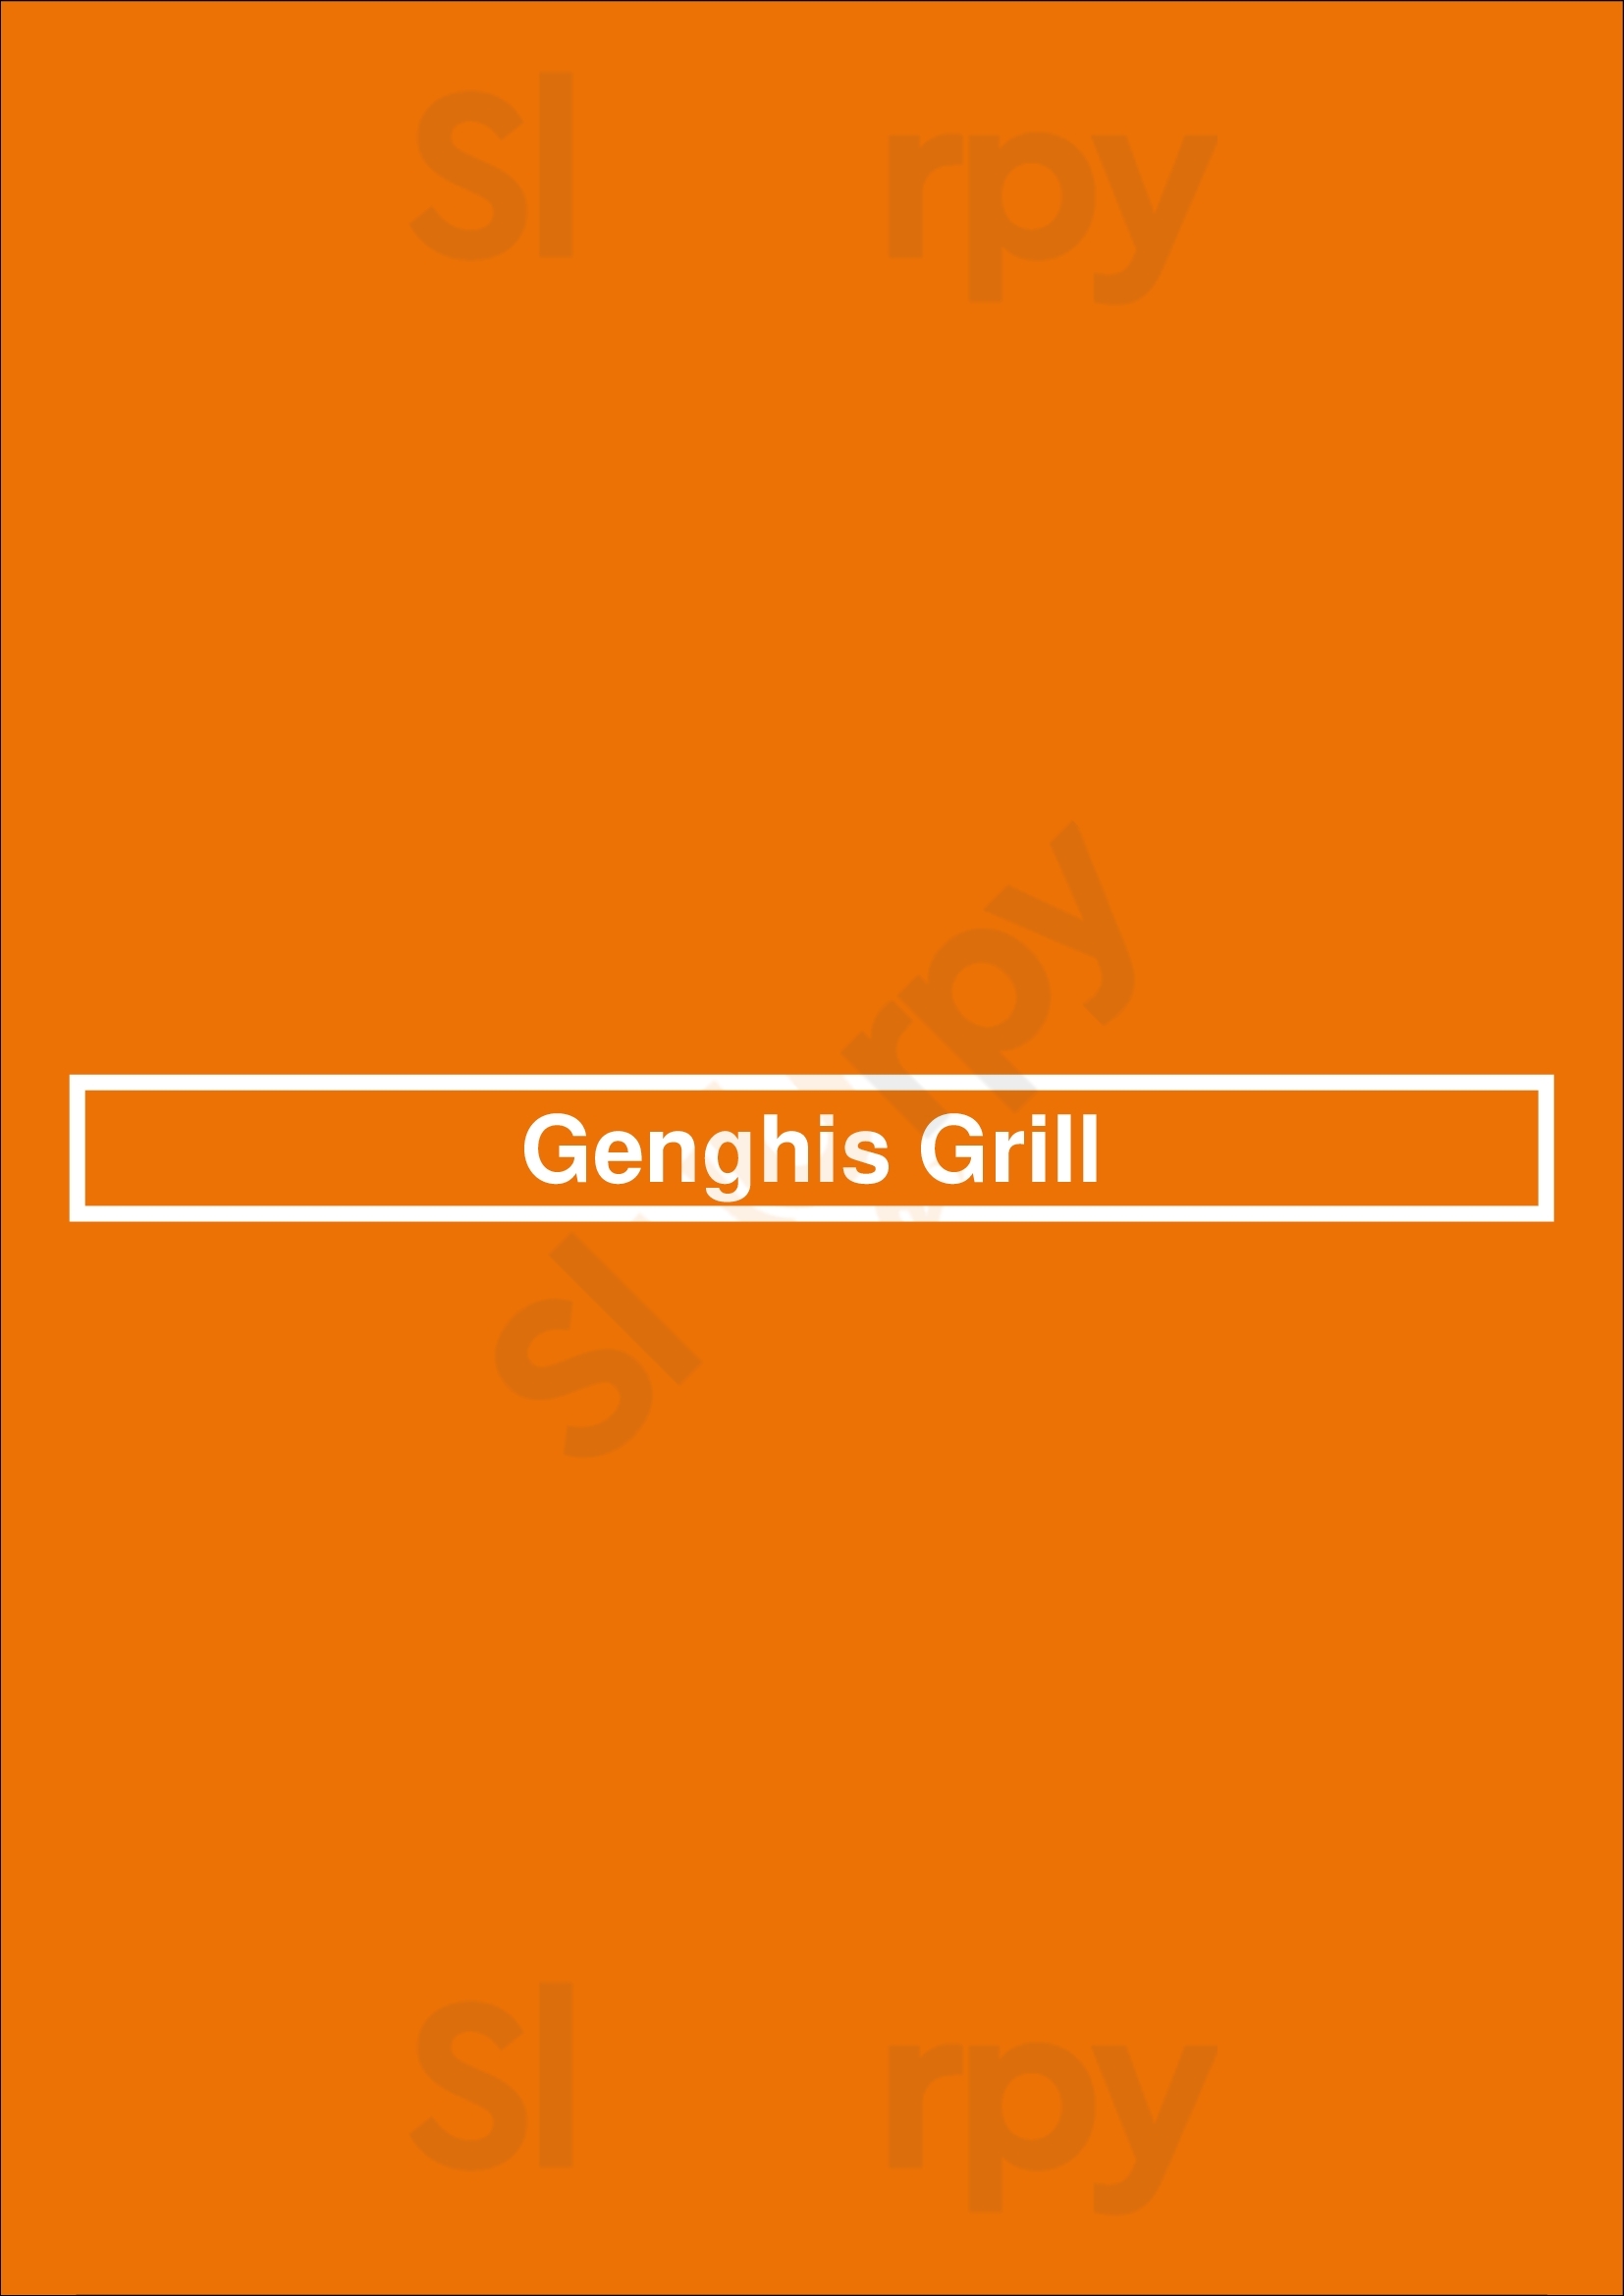 Genghis Grill San Antonio Menu - 1